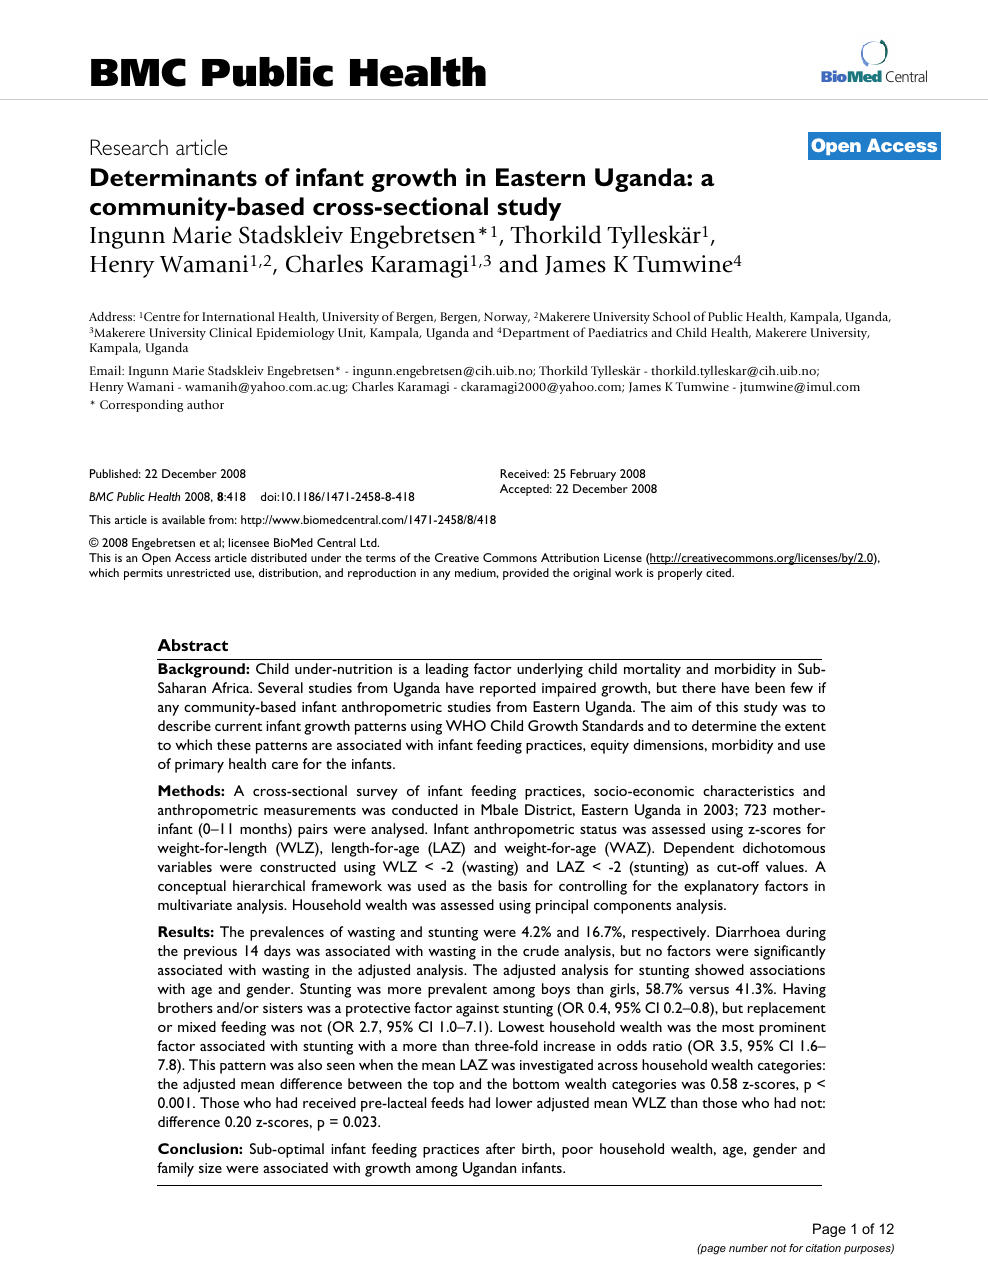 infant growth in Eastern Uganda 